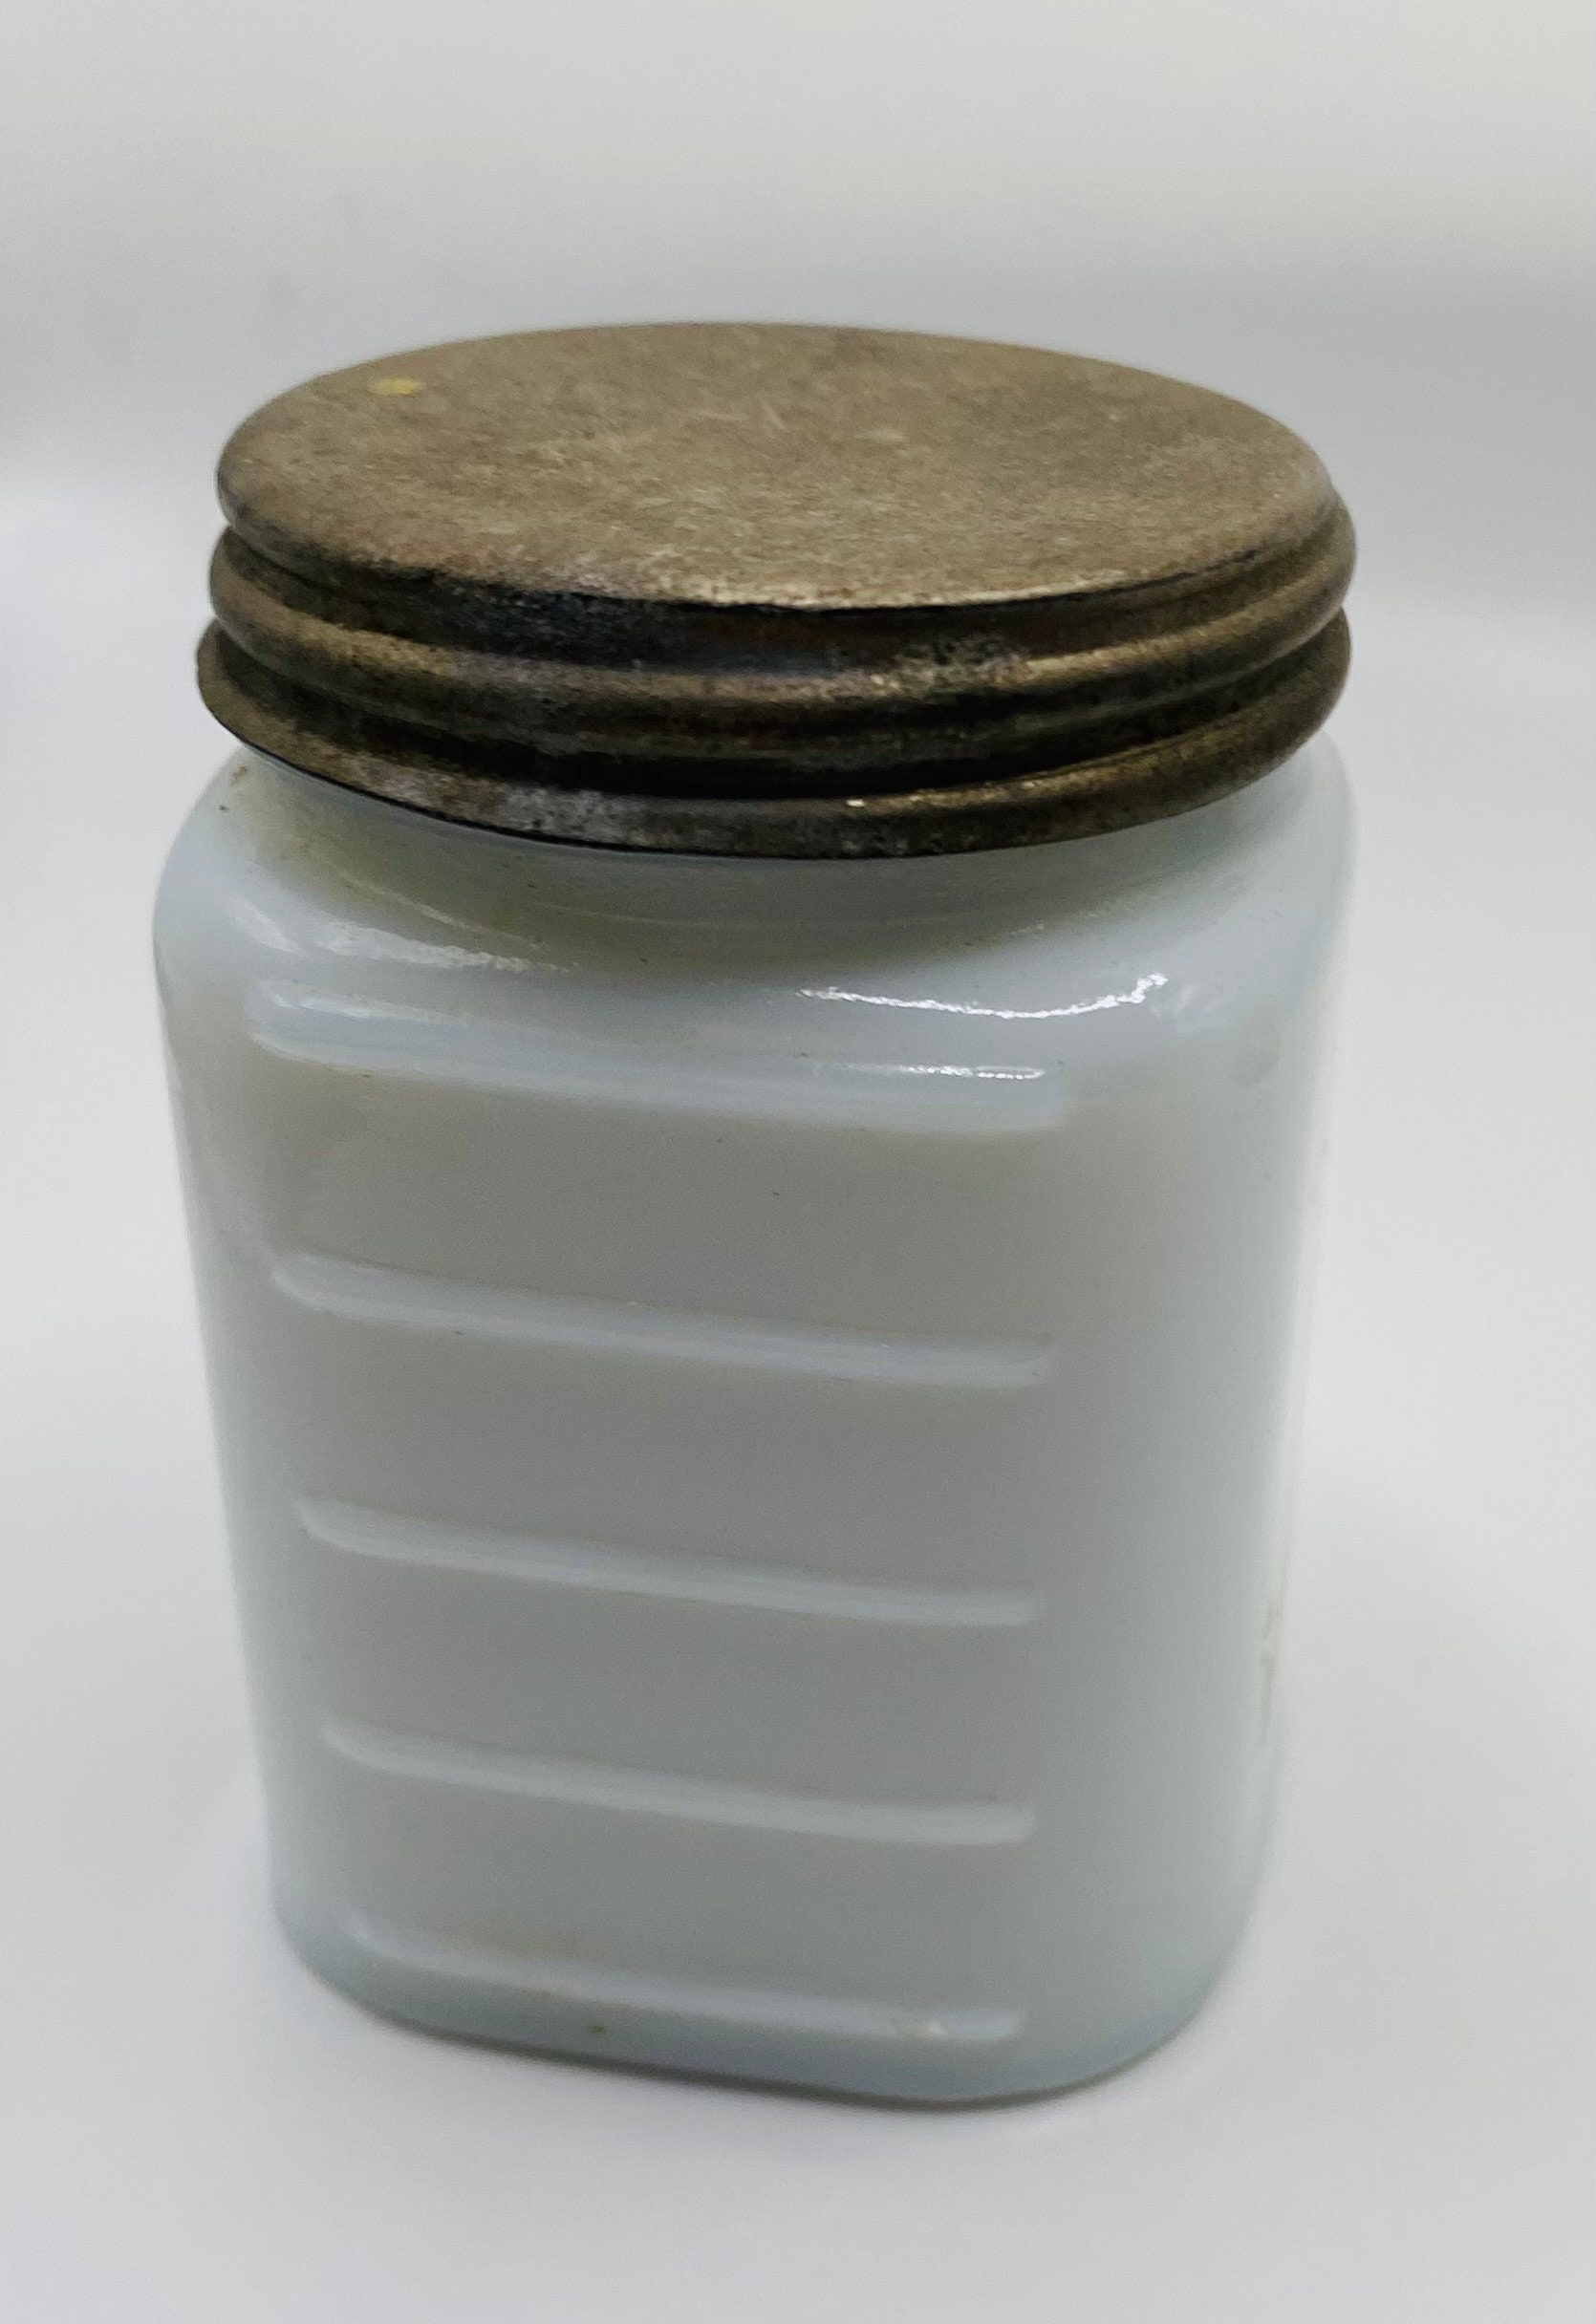 Vintage Drug Store Milk Glass Jar Resinol Medicine Bottle Ointment Pharmacy  Super-lanolated Medicinal Skin Ointment -  Denmark